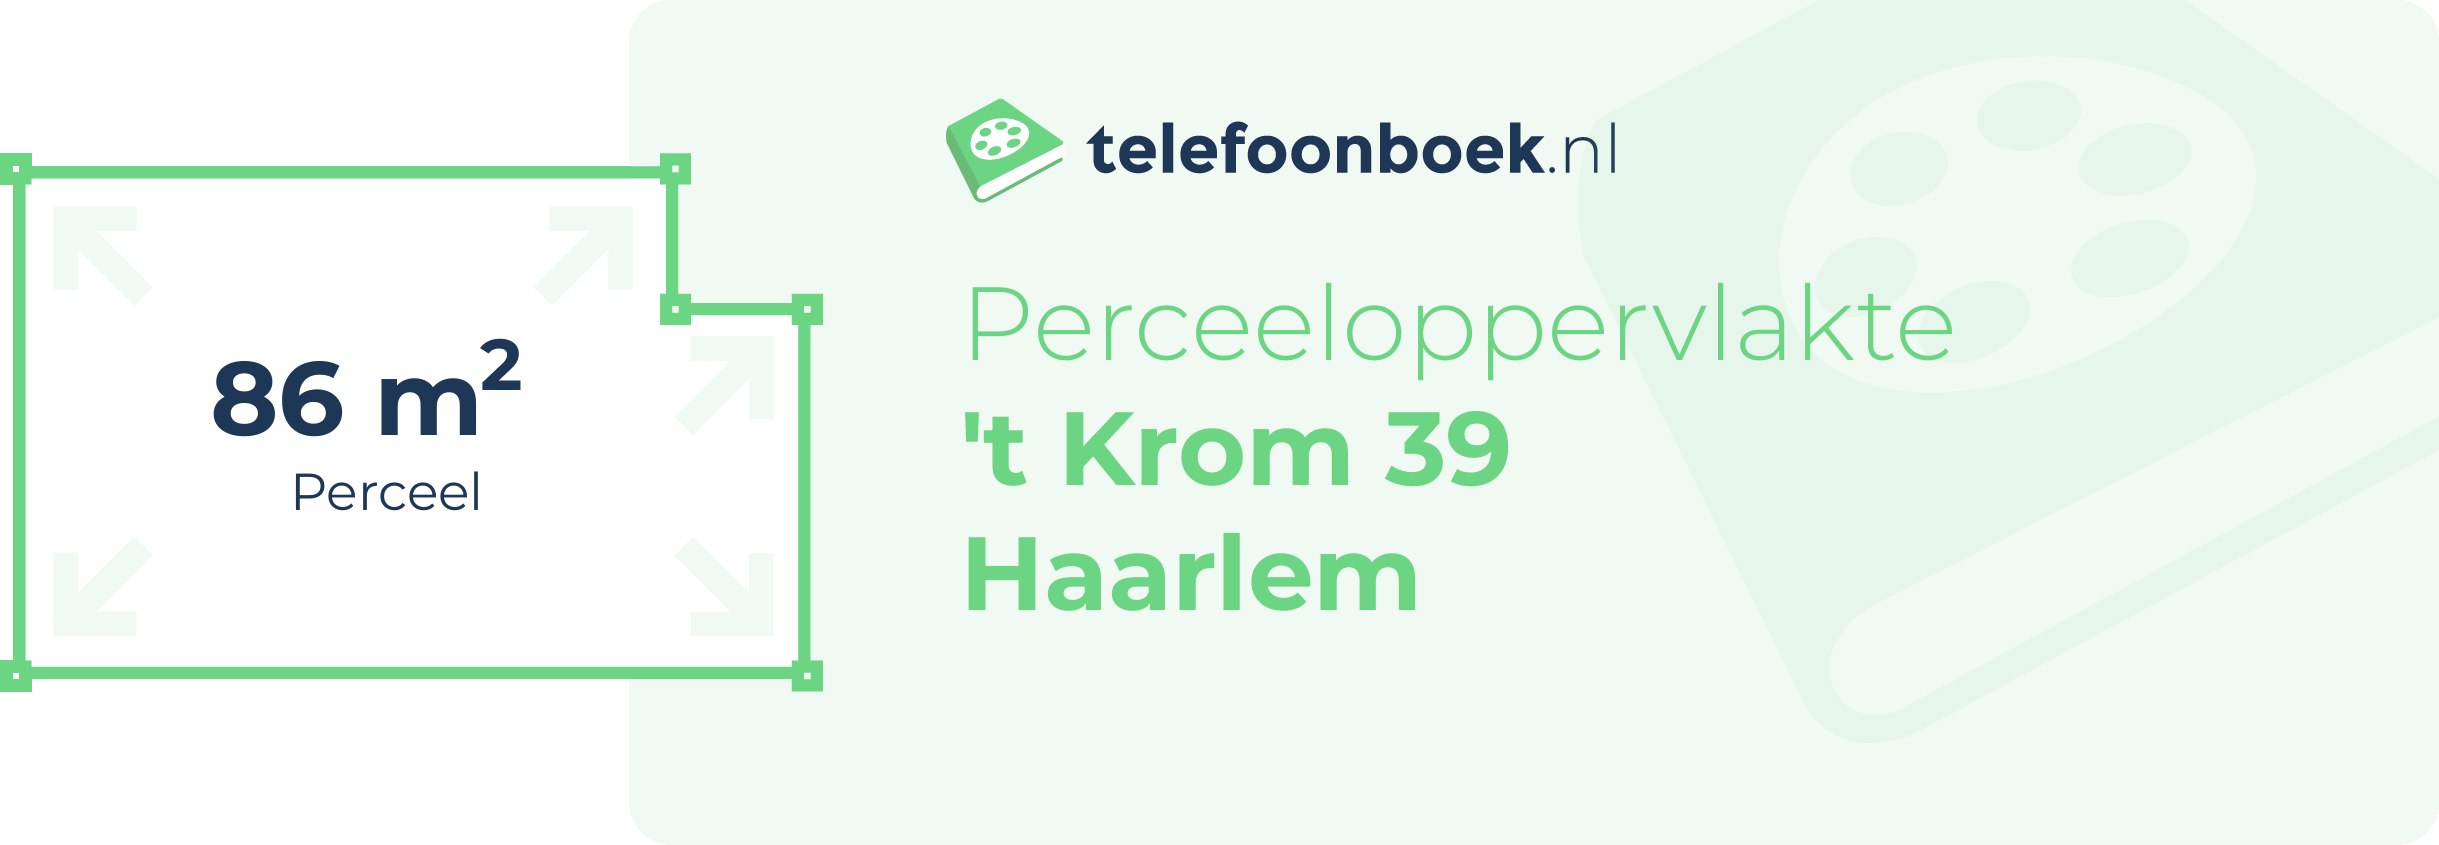 Perceeloppervlakte 't Krom 39 Haarlem